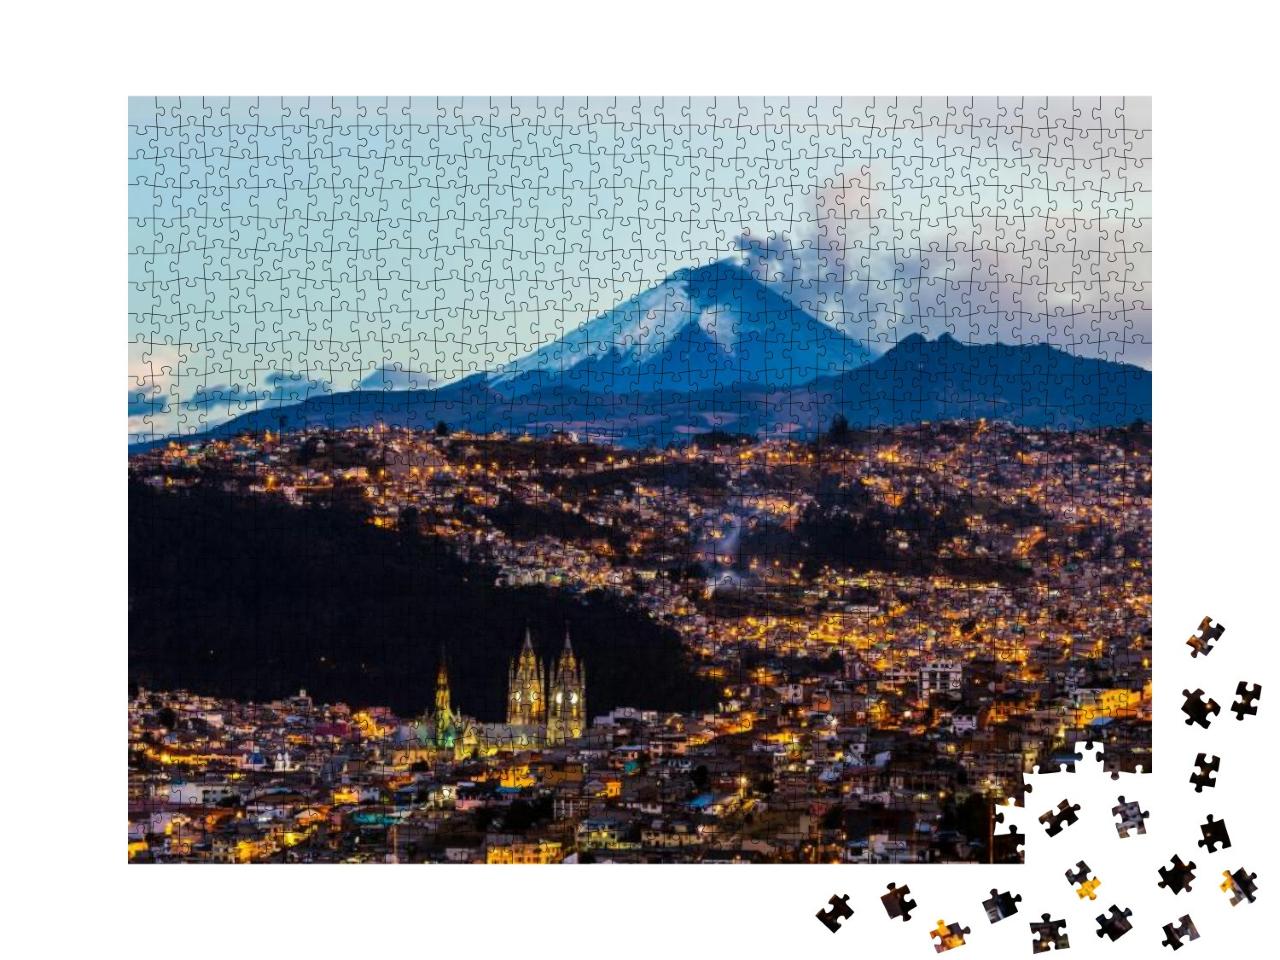 Cotopaxi Volcano Eruption Seen from Quito, Ecuador... Jigsaw Puzzle with 1000 pieces